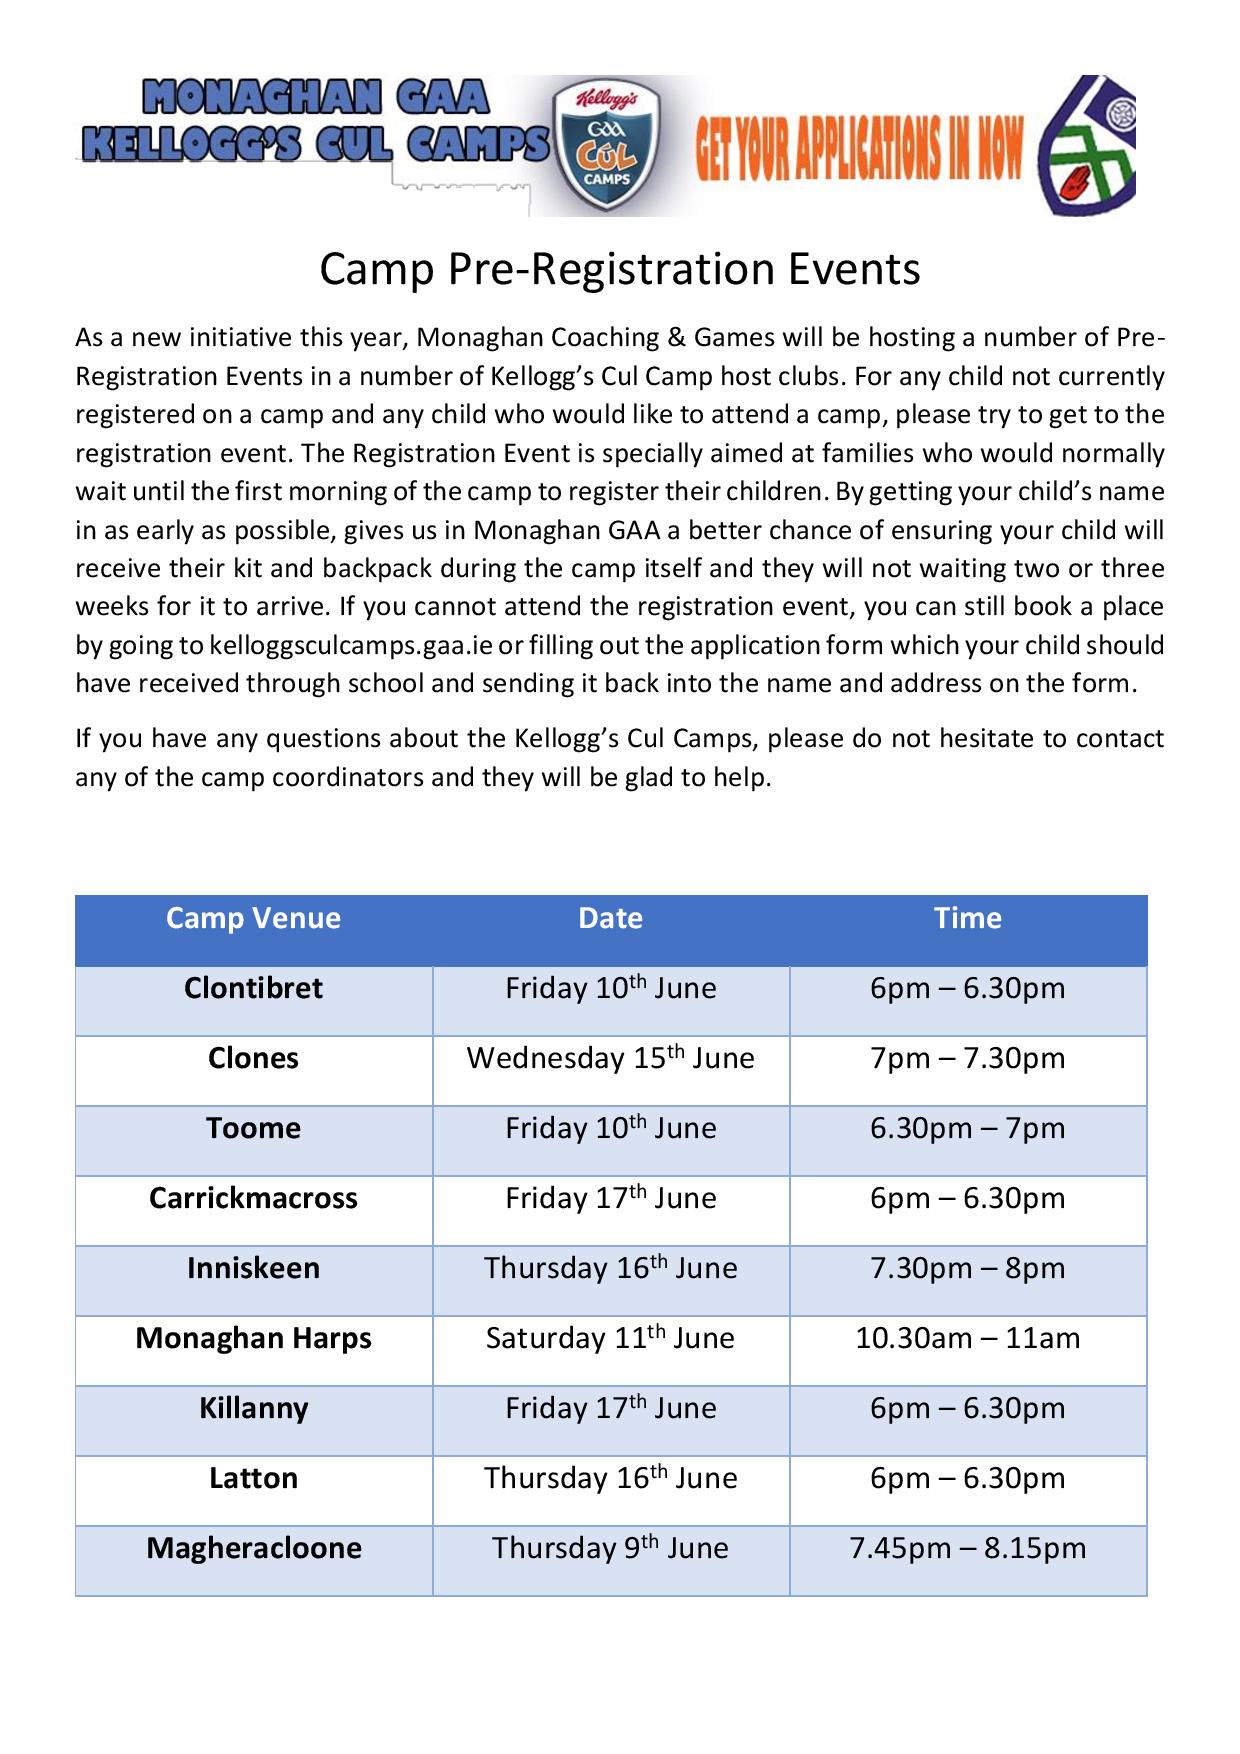 Kellogg’s Cul Camp – Registration Events in Inniskeen & Latton – TONIGHT!